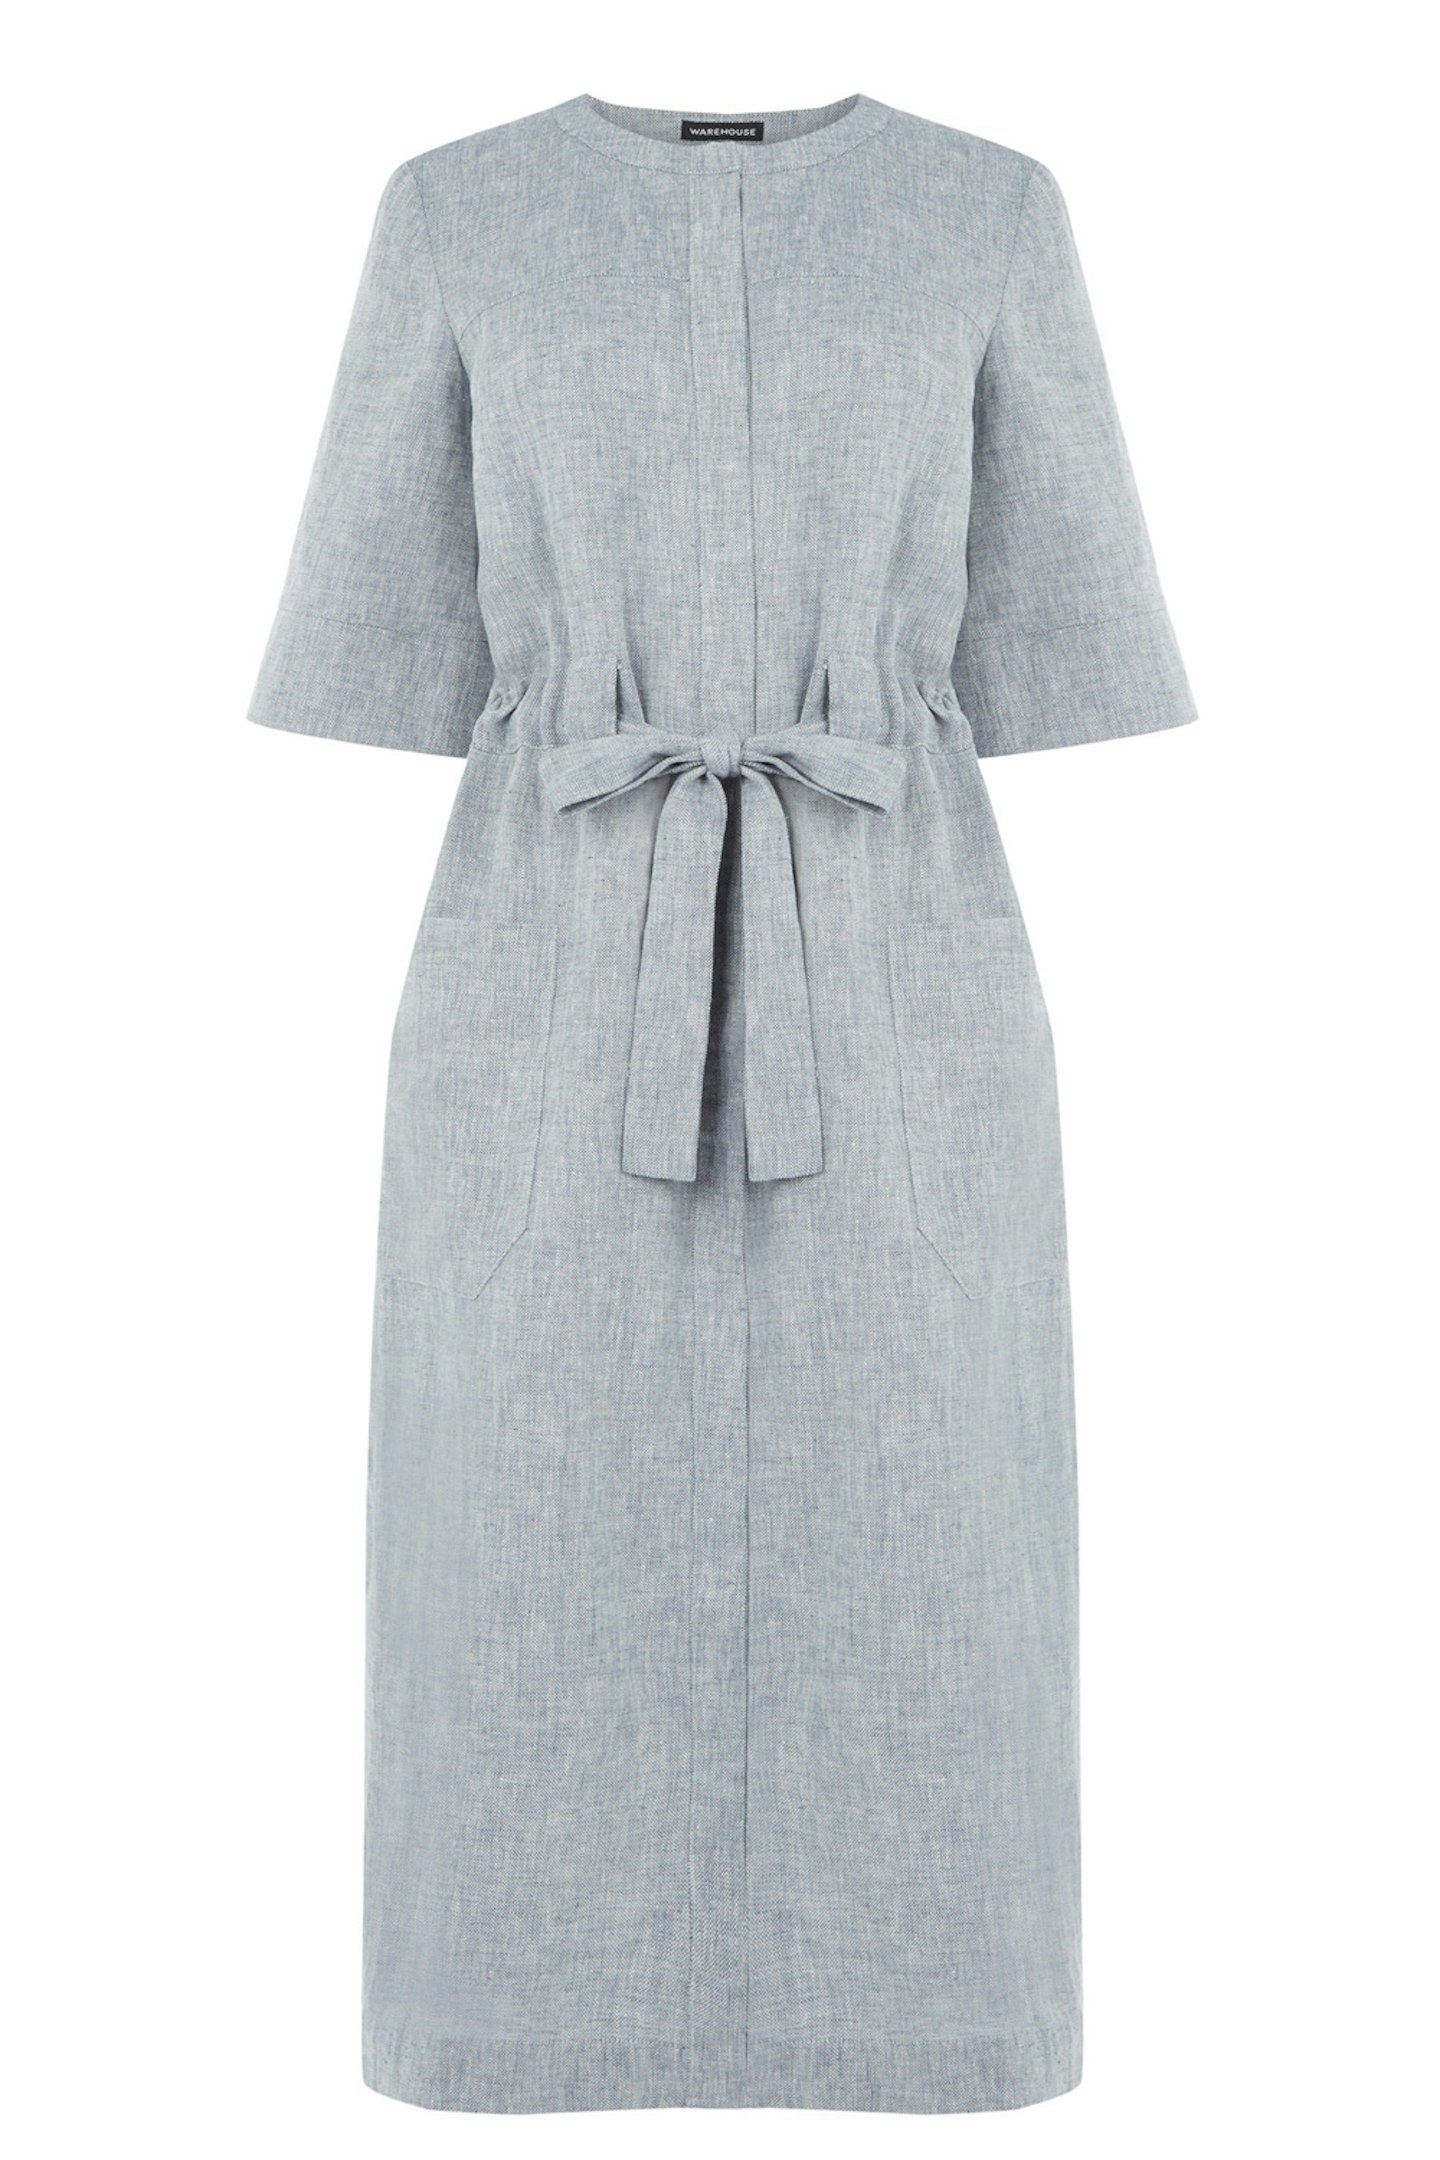 Linen Midi Dress, £55, [Warehouse](http://www.warehouse.co.uk///warehouse/fcp-product/02550730)